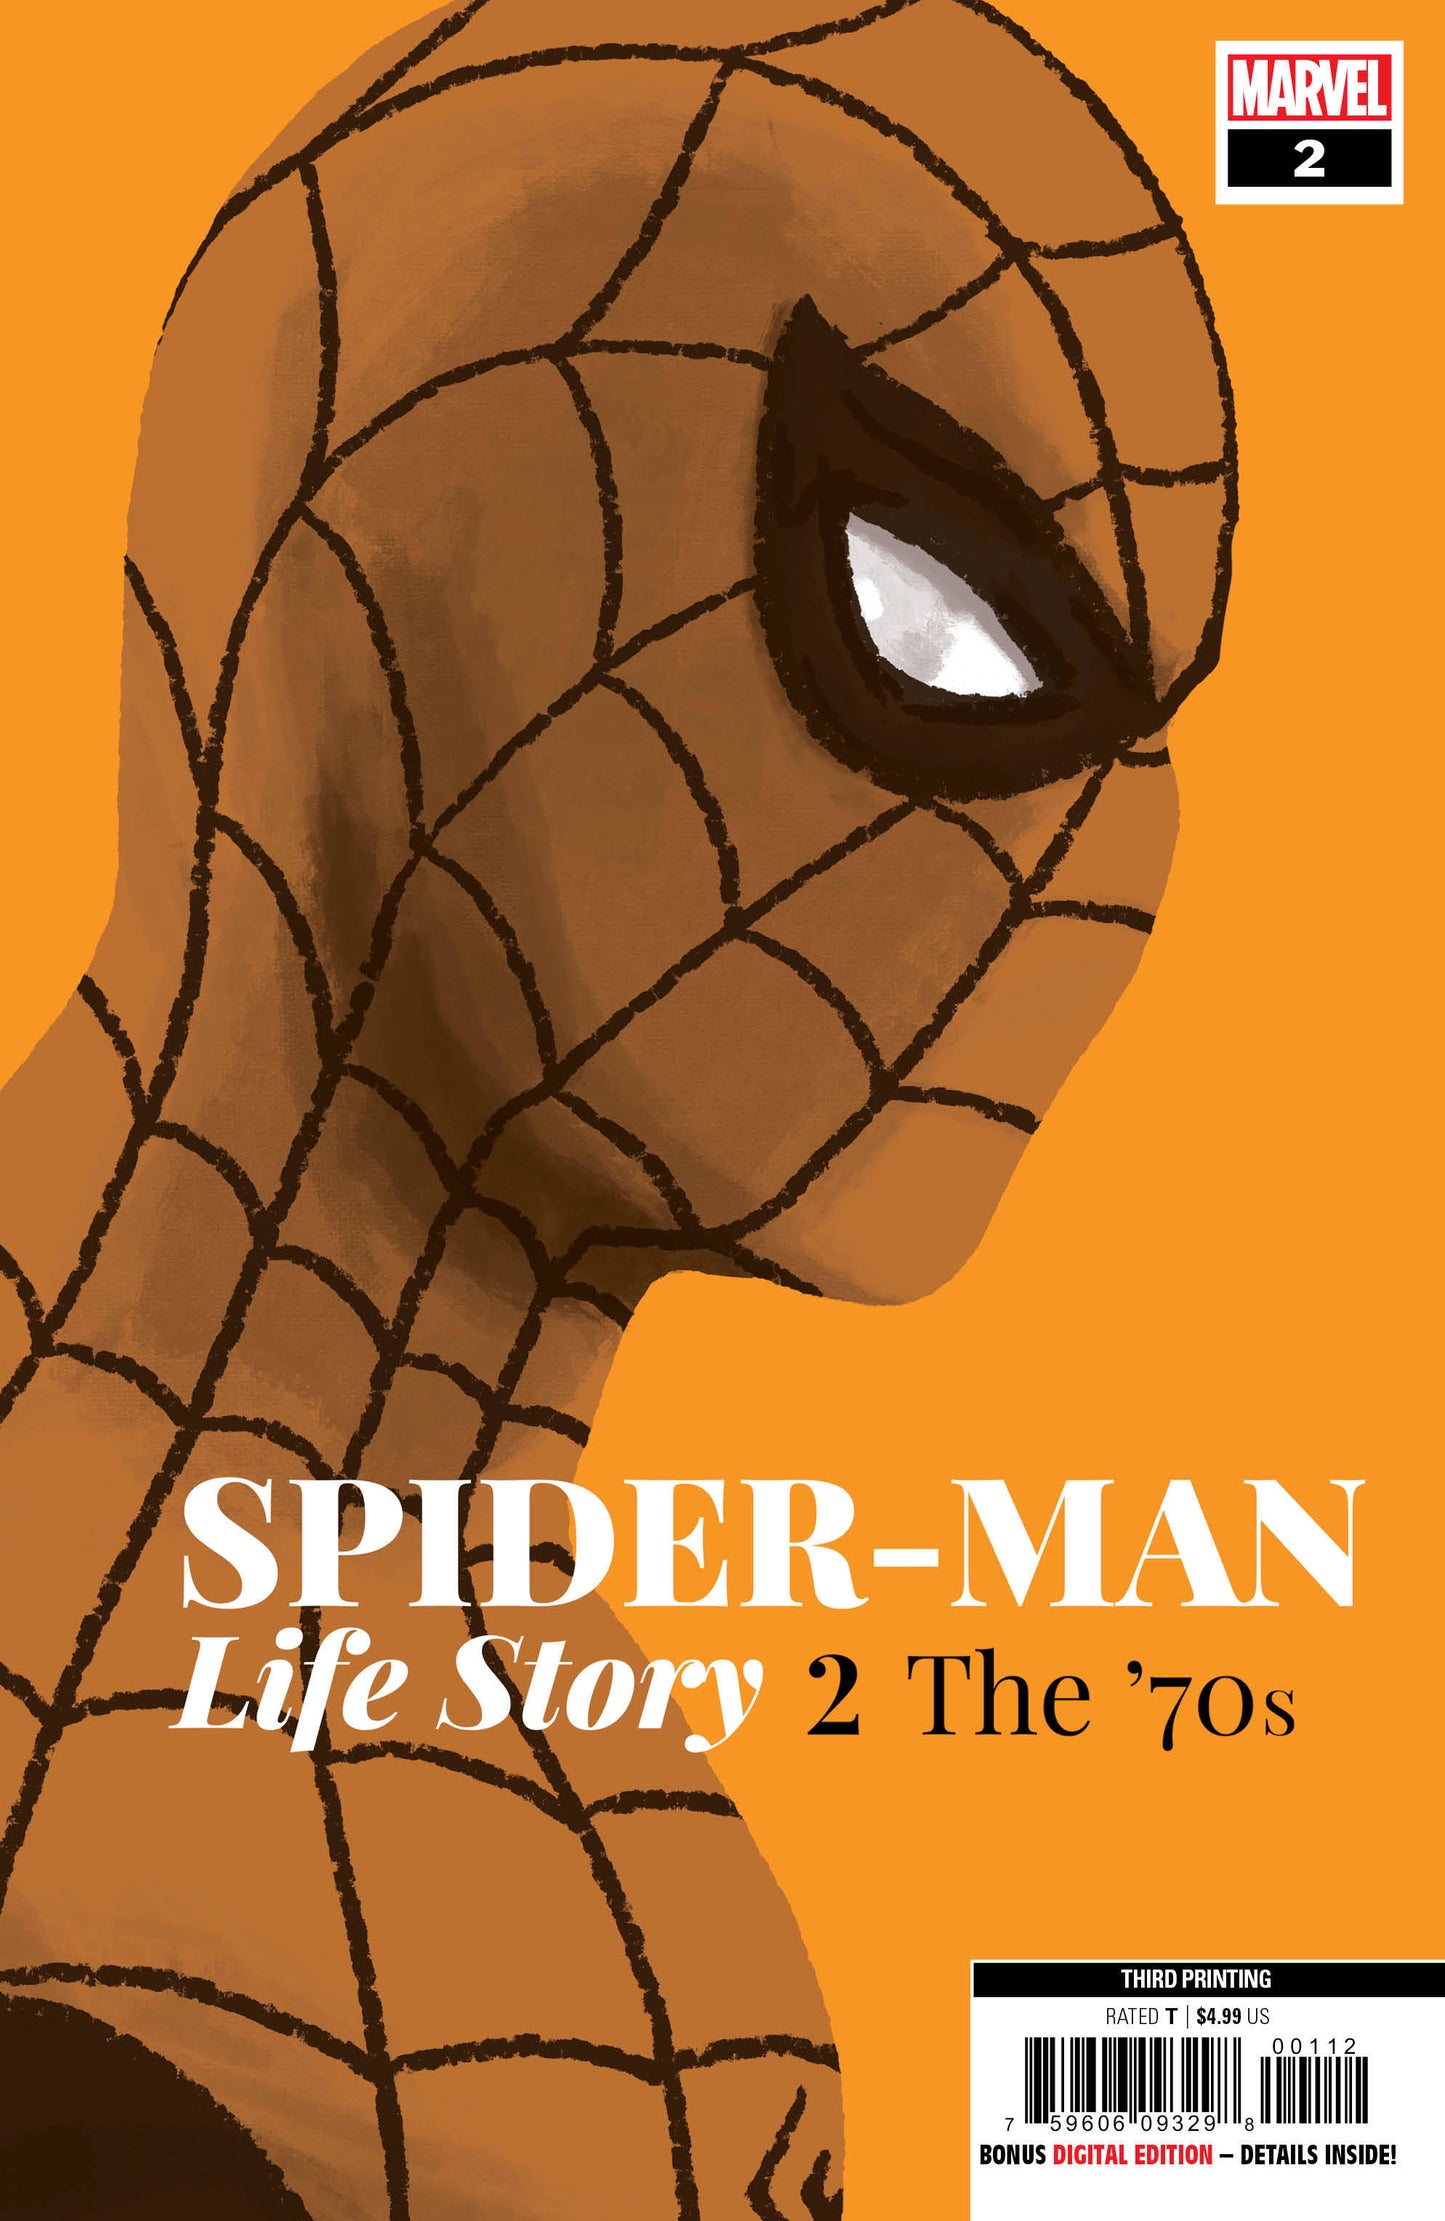 SPIDER-MAN LIFE STORY #2 (OF 6) 3rd Print Chip Zdarsky Variant (07/24/2019) MARVEL